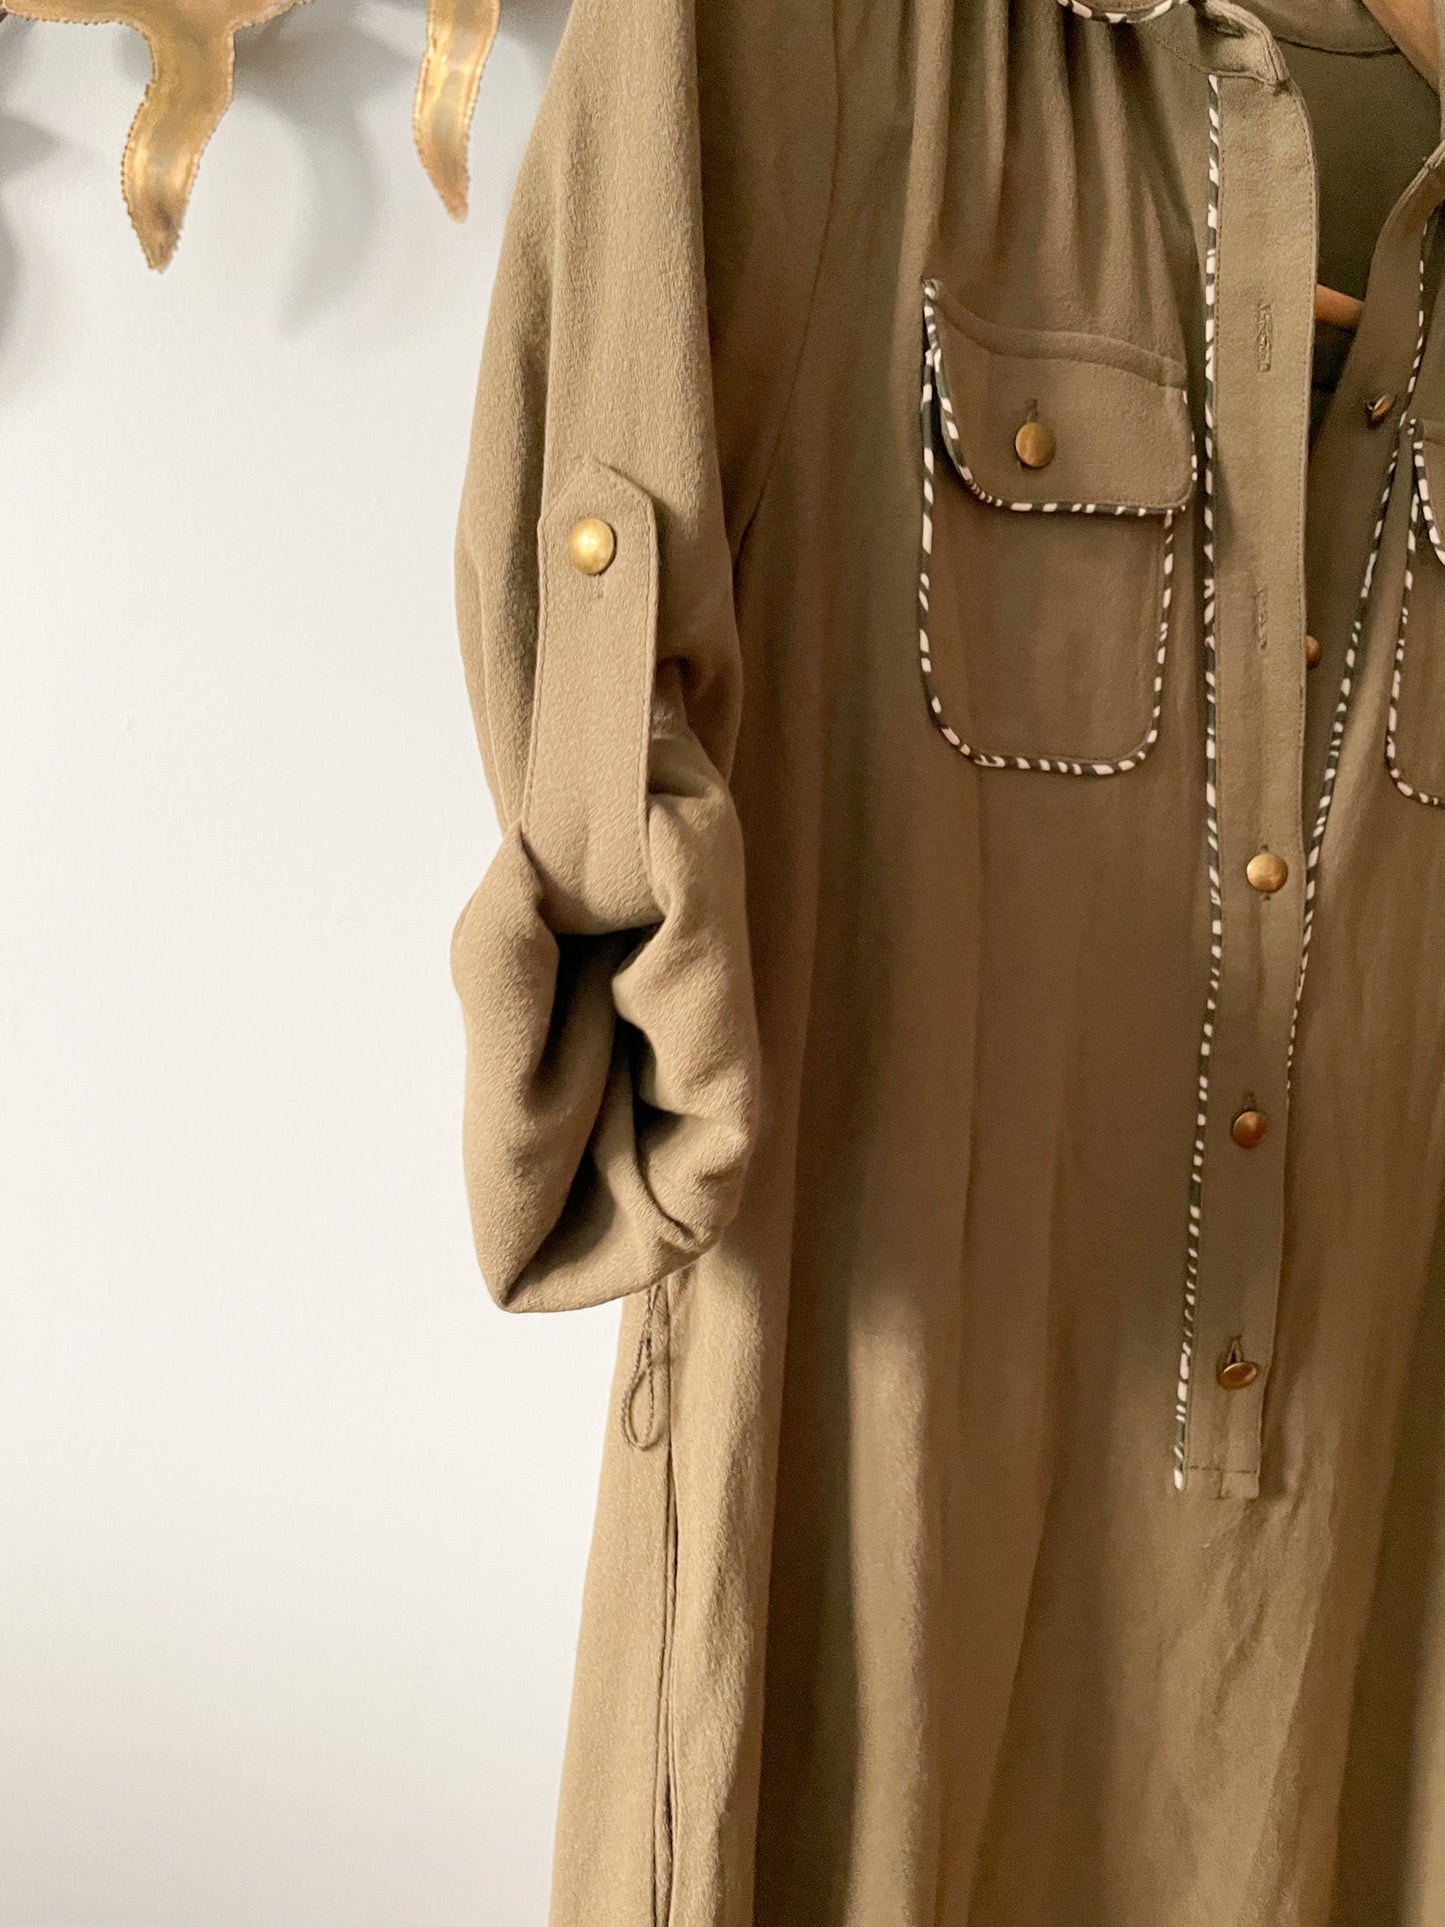 Banana Republic Olive Green Safari Collared Button Front Dress - XS/S